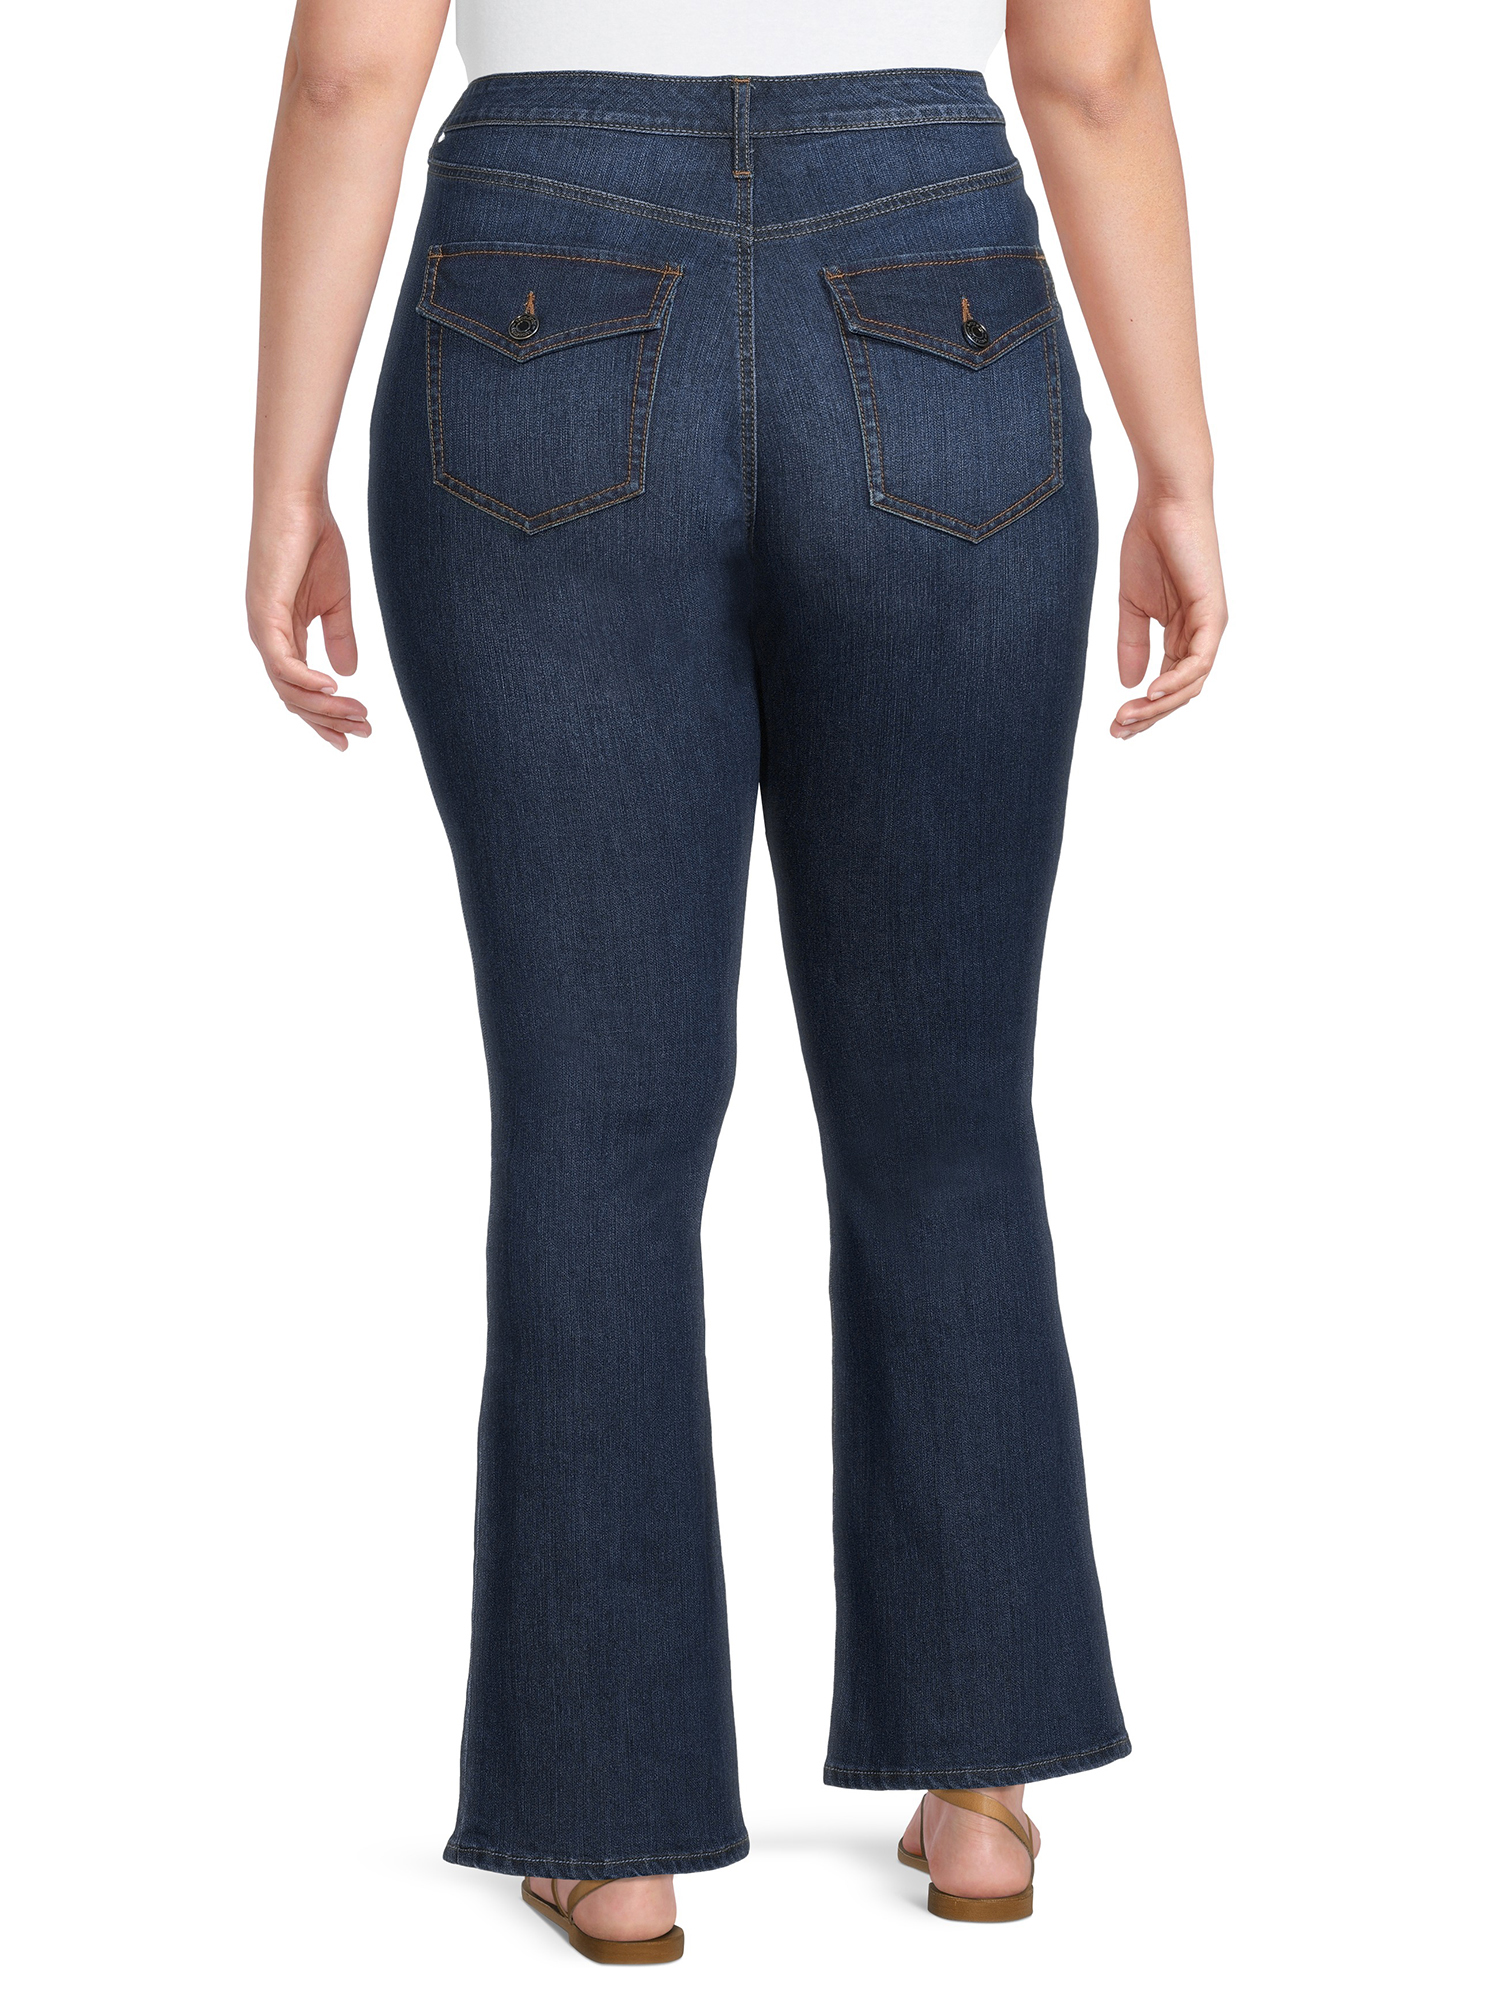 Terra & Sky Women's Plus Size Bootcut Jeans - image 5 of 6